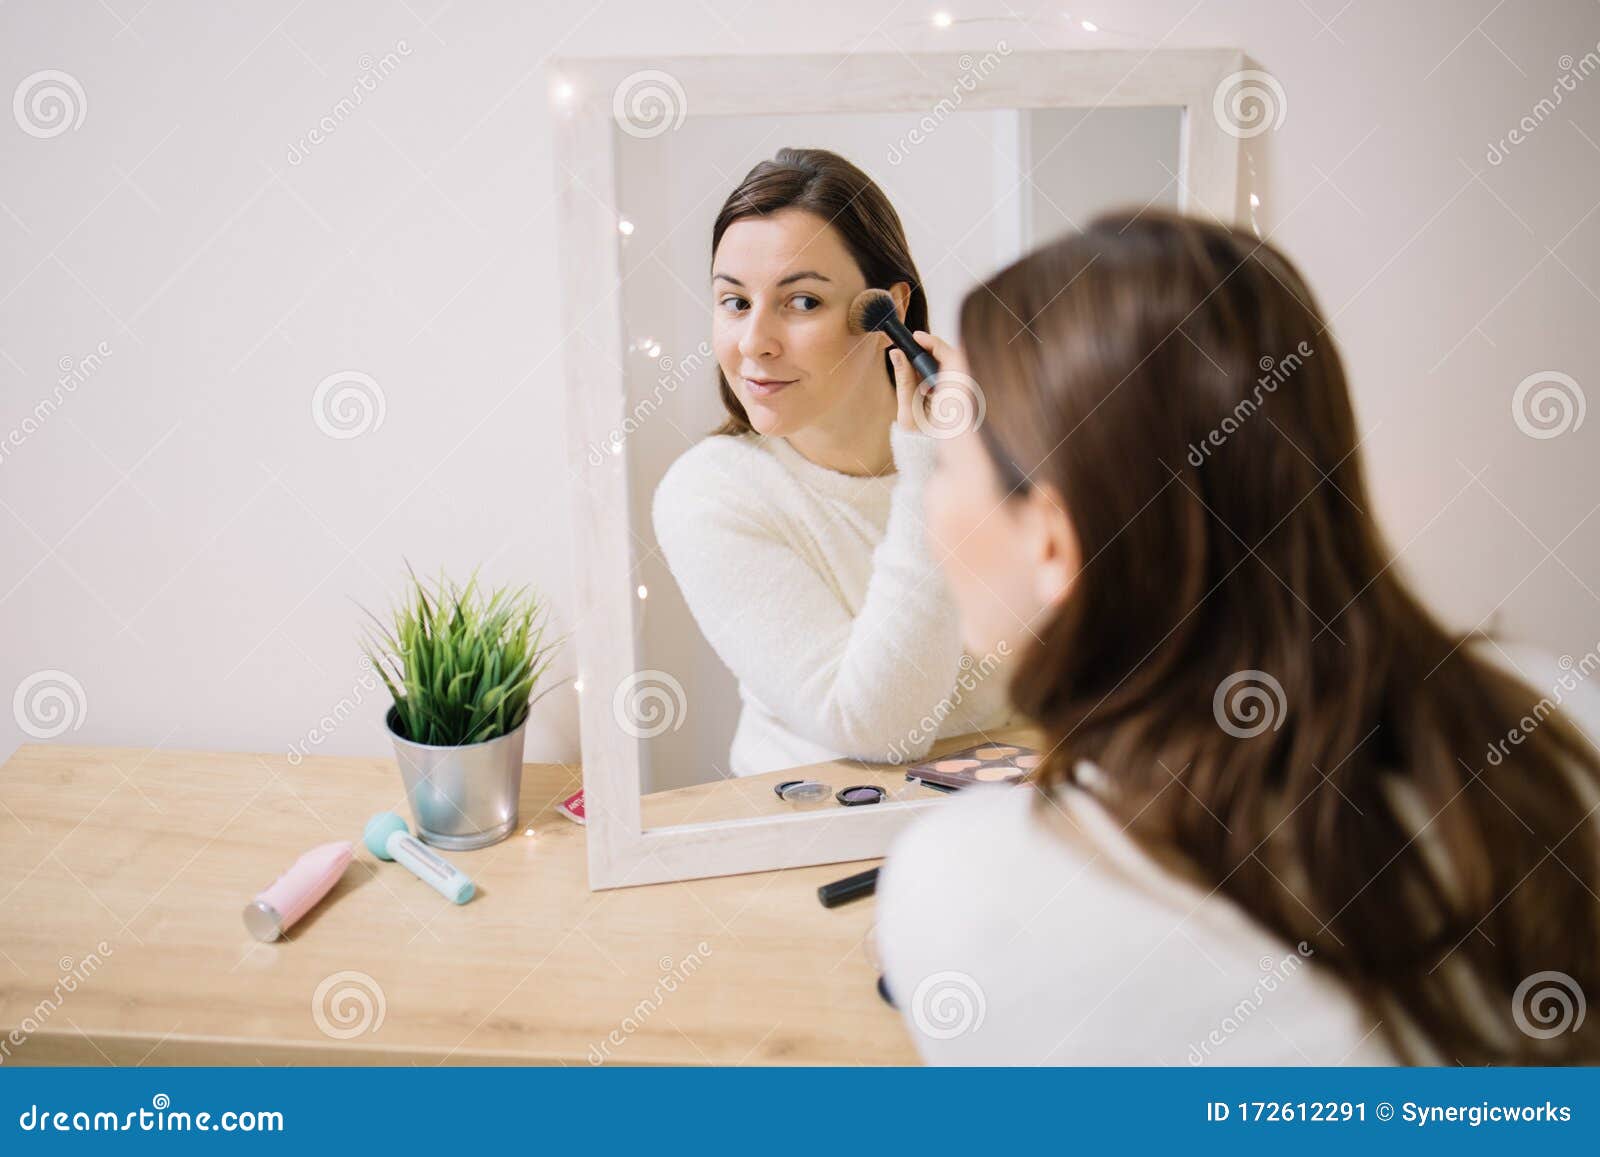 mirrored image of a girl blushing her cheekbone